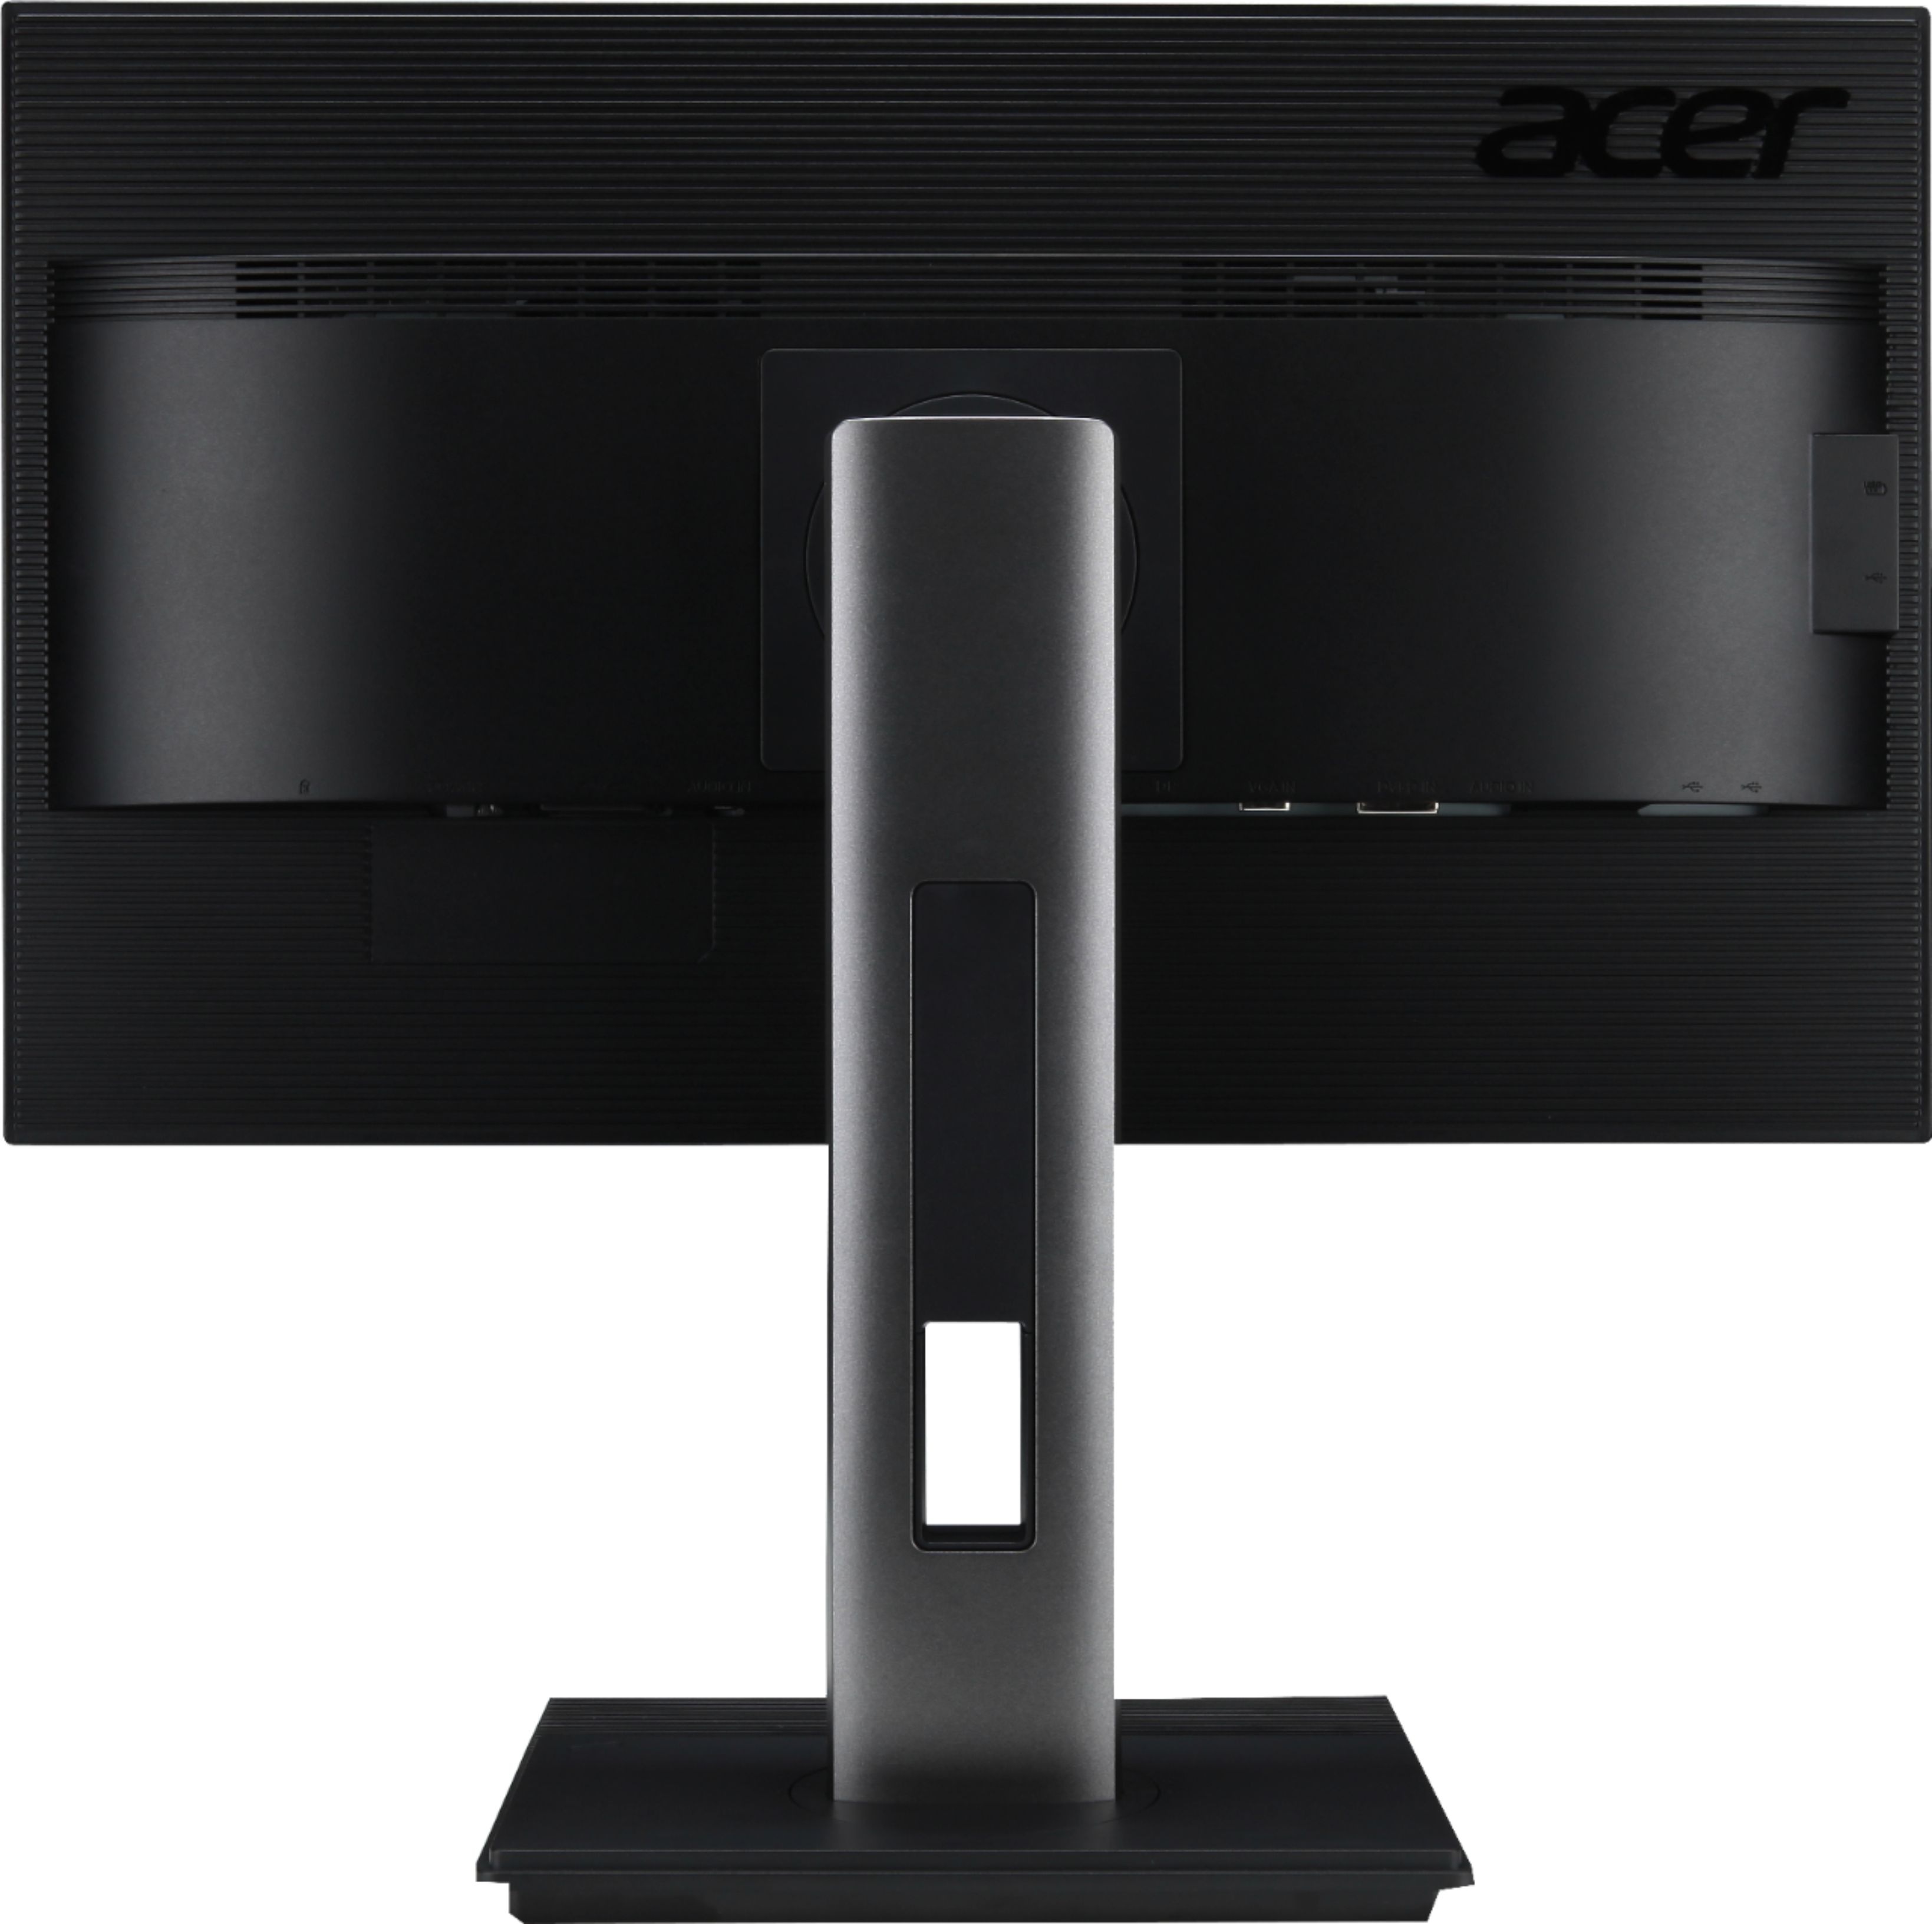 Back View: Acer - 21.5" LED FHD Monitor (DVI, DisplayPort, VGA) - Dark Gray